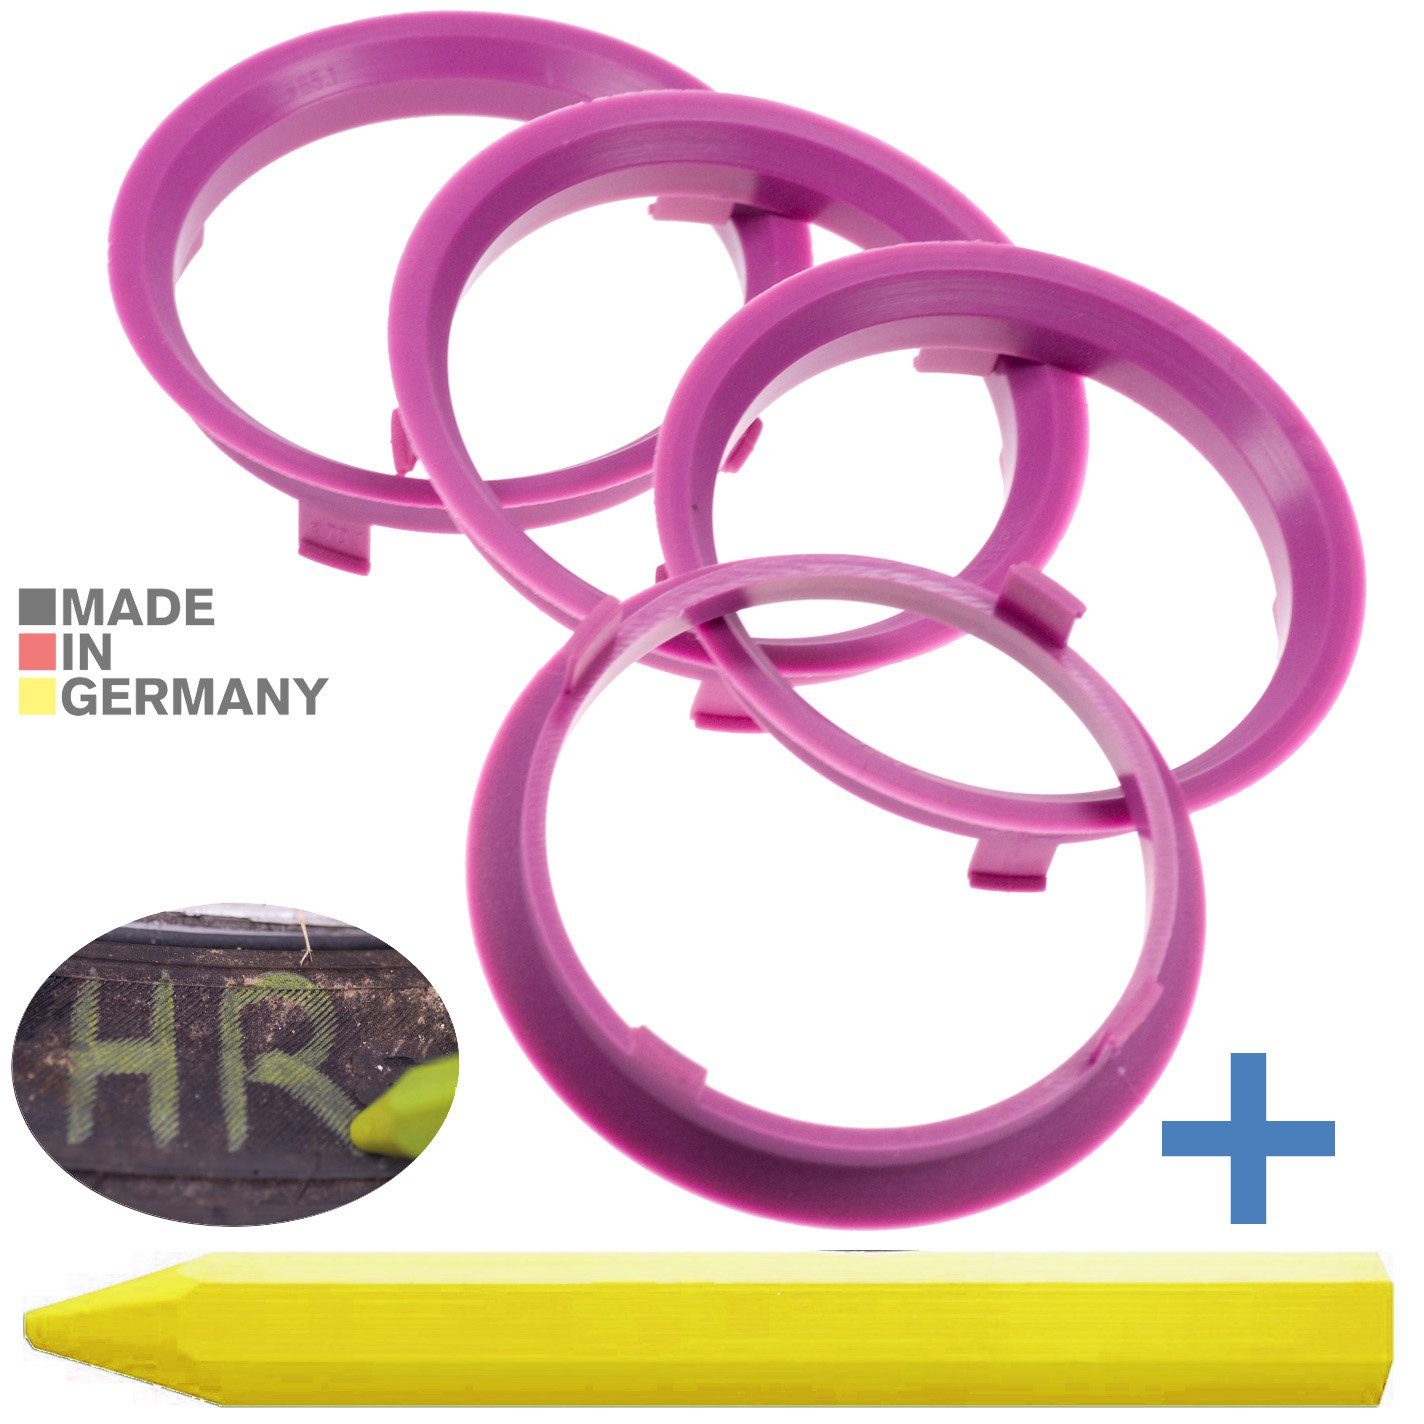 RKC Reifenstift 4X Zentrierringe Violett Felgen Ringe + 1x Reifen Kreide Fett Stift, Maße: 70,1 x 65,1 mm | Reifenstifte